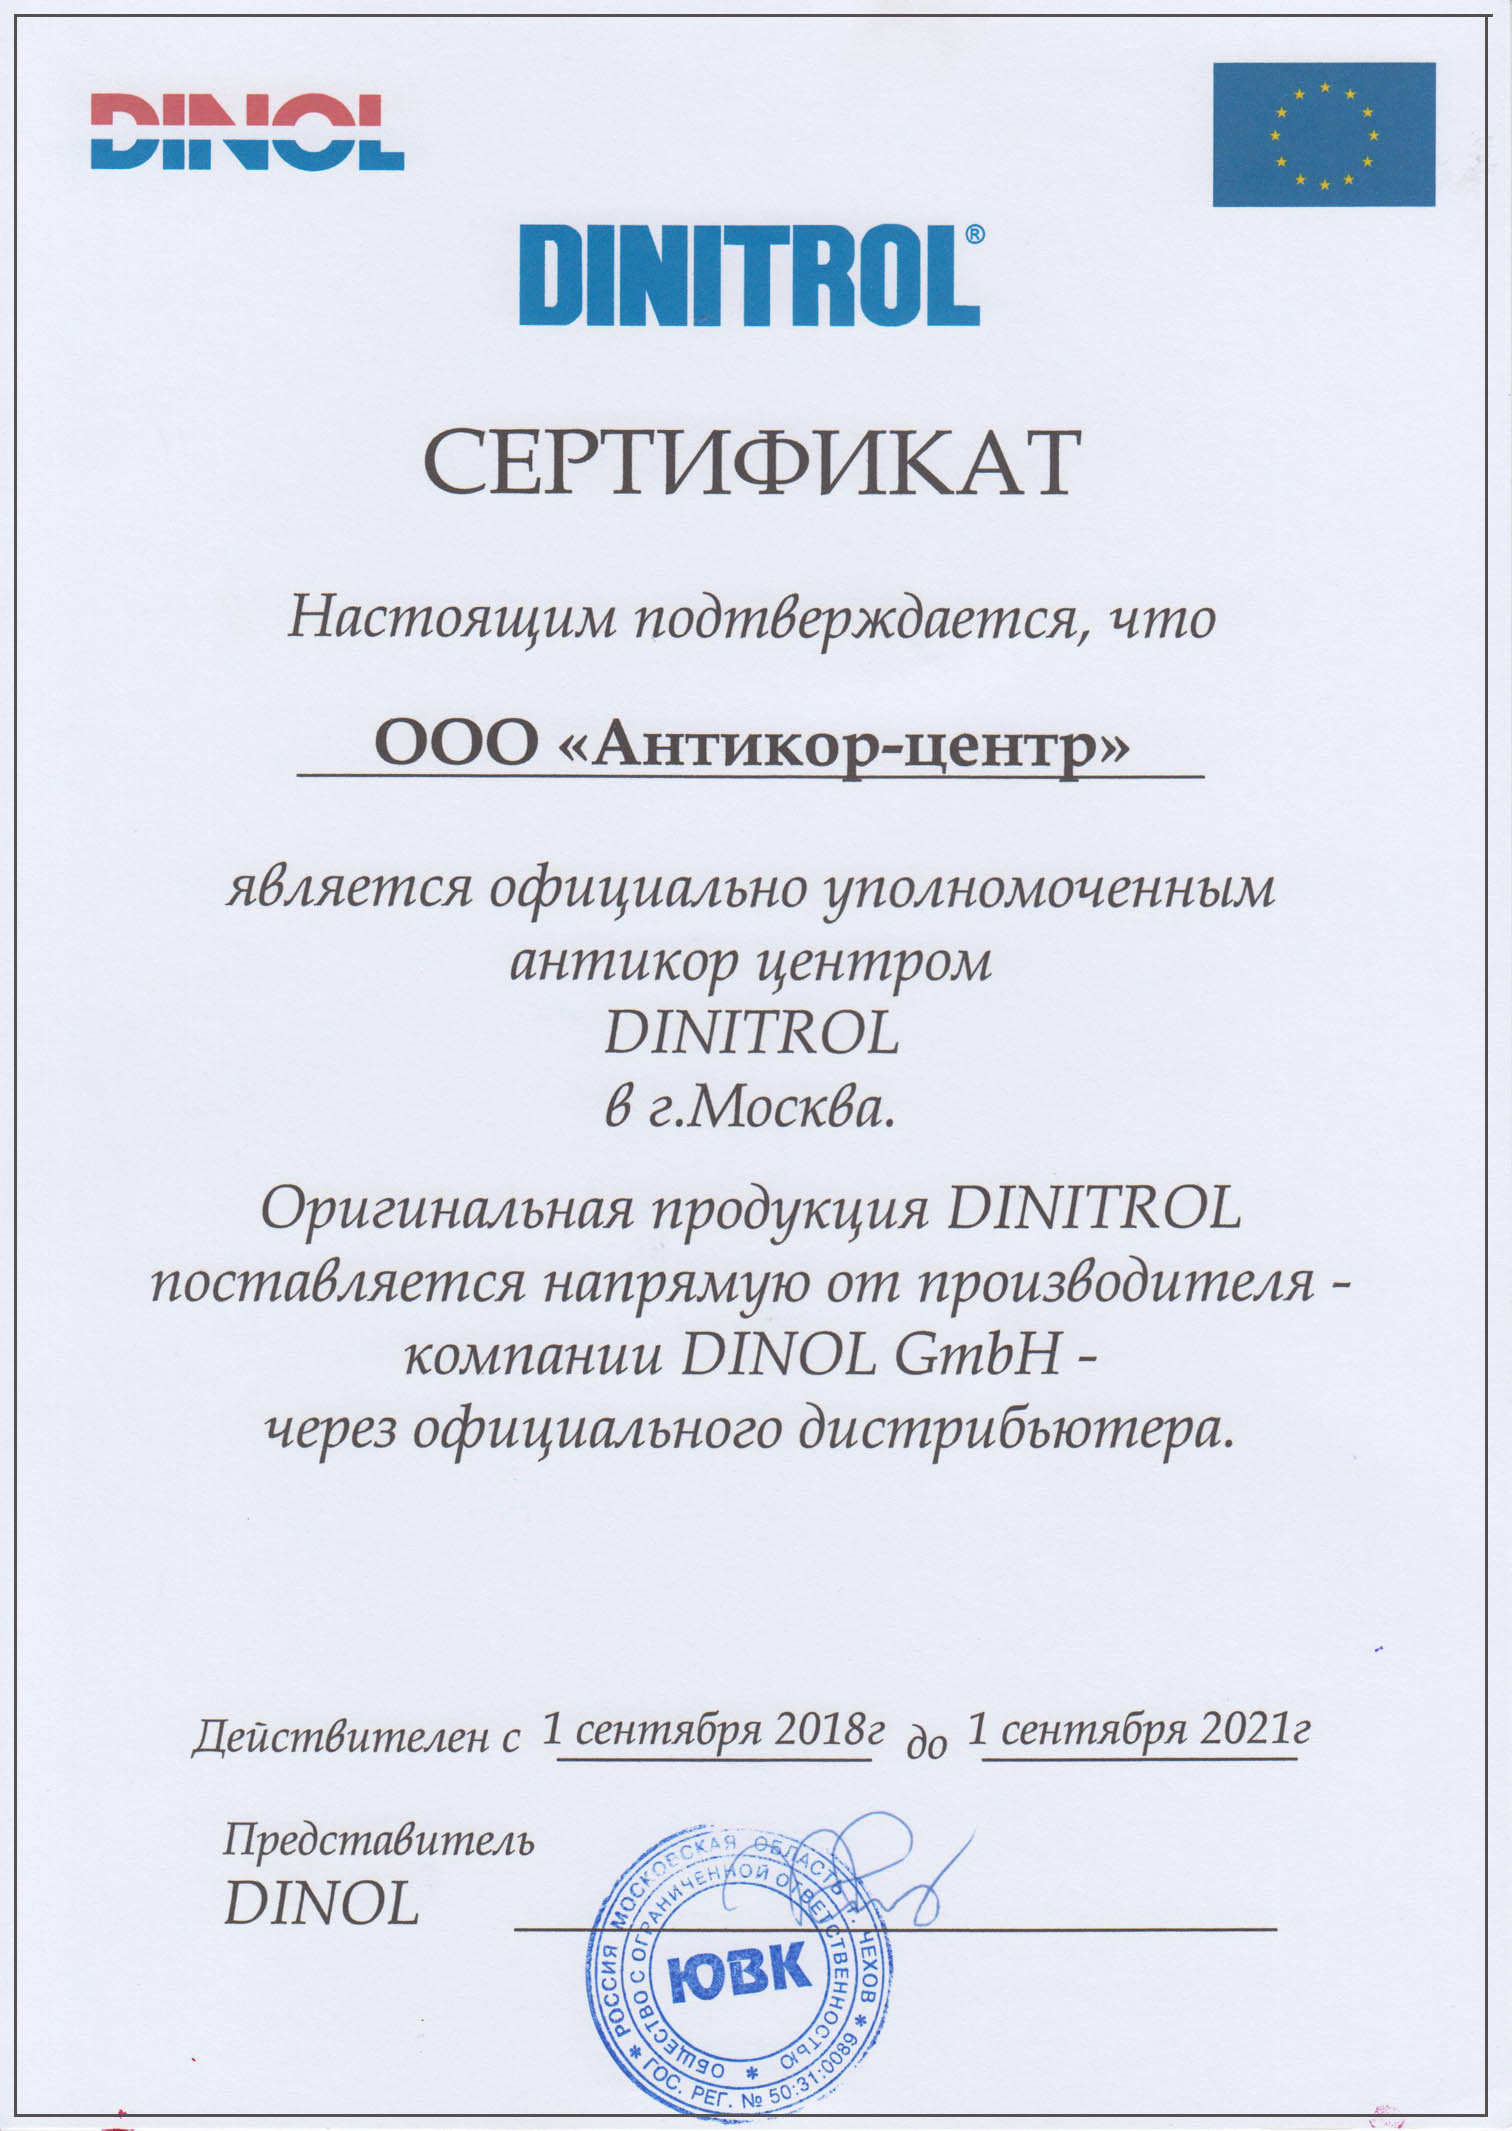 * Сертификация Dinitrol